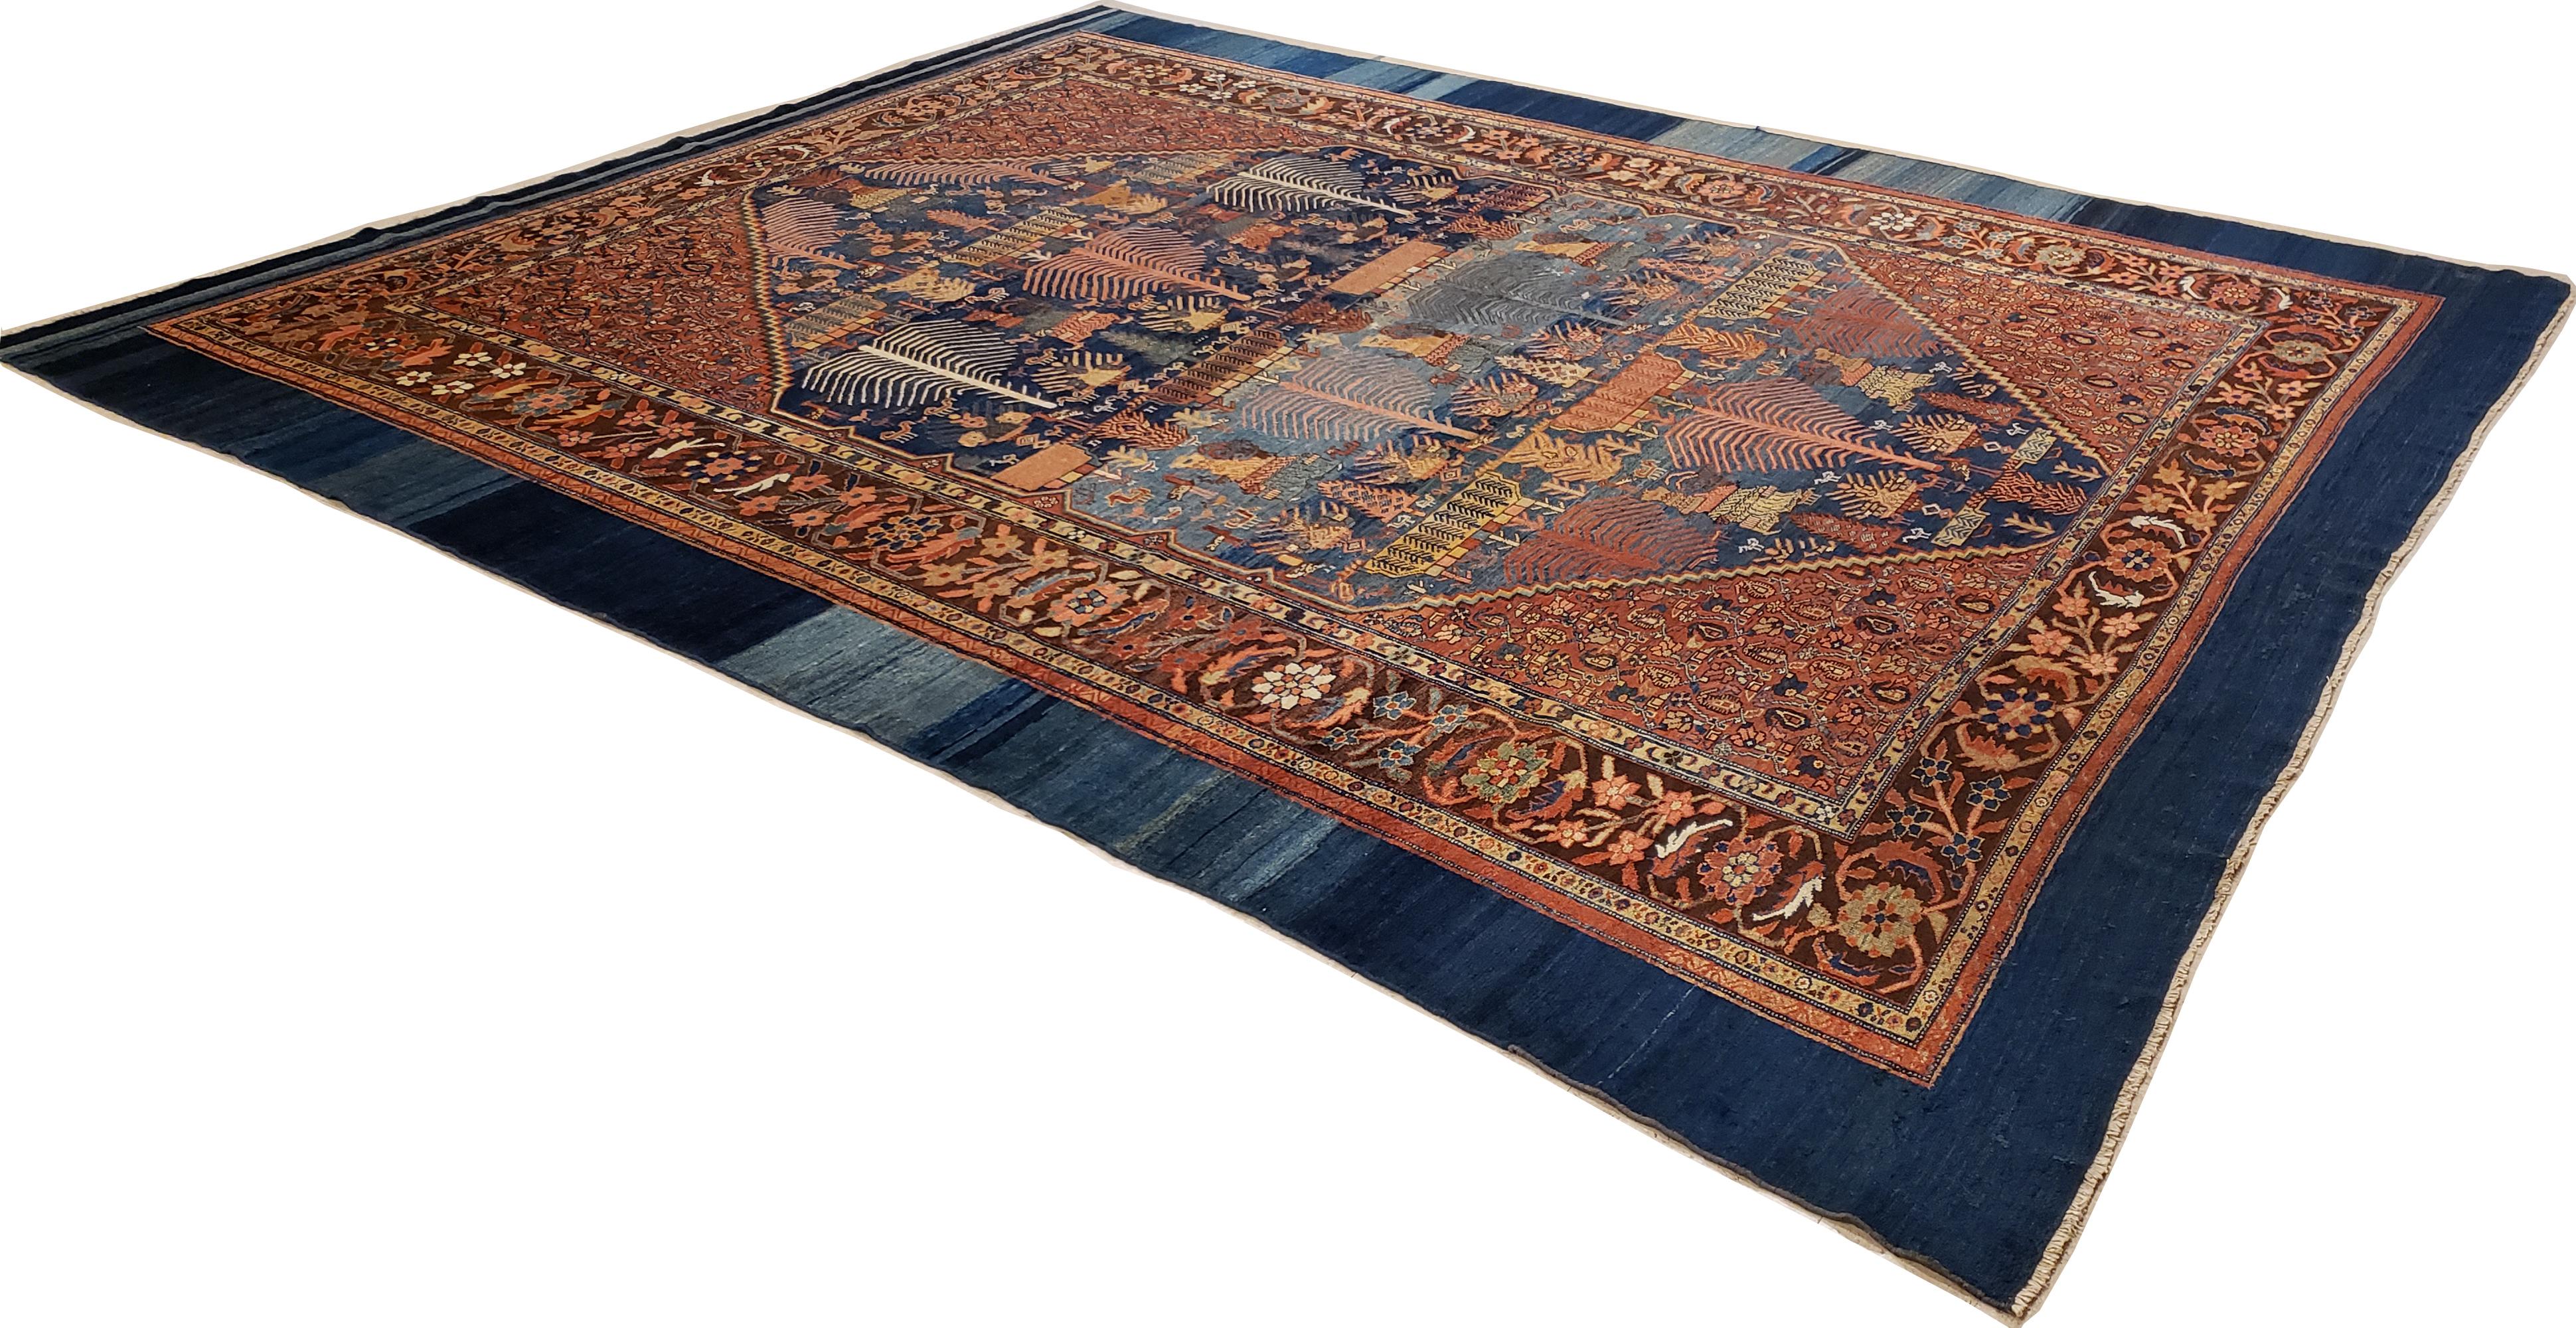 Antique Bakshaish Carpet, Oriental Persian Handmade in Light Blue, Rust and Gold For Sale 5